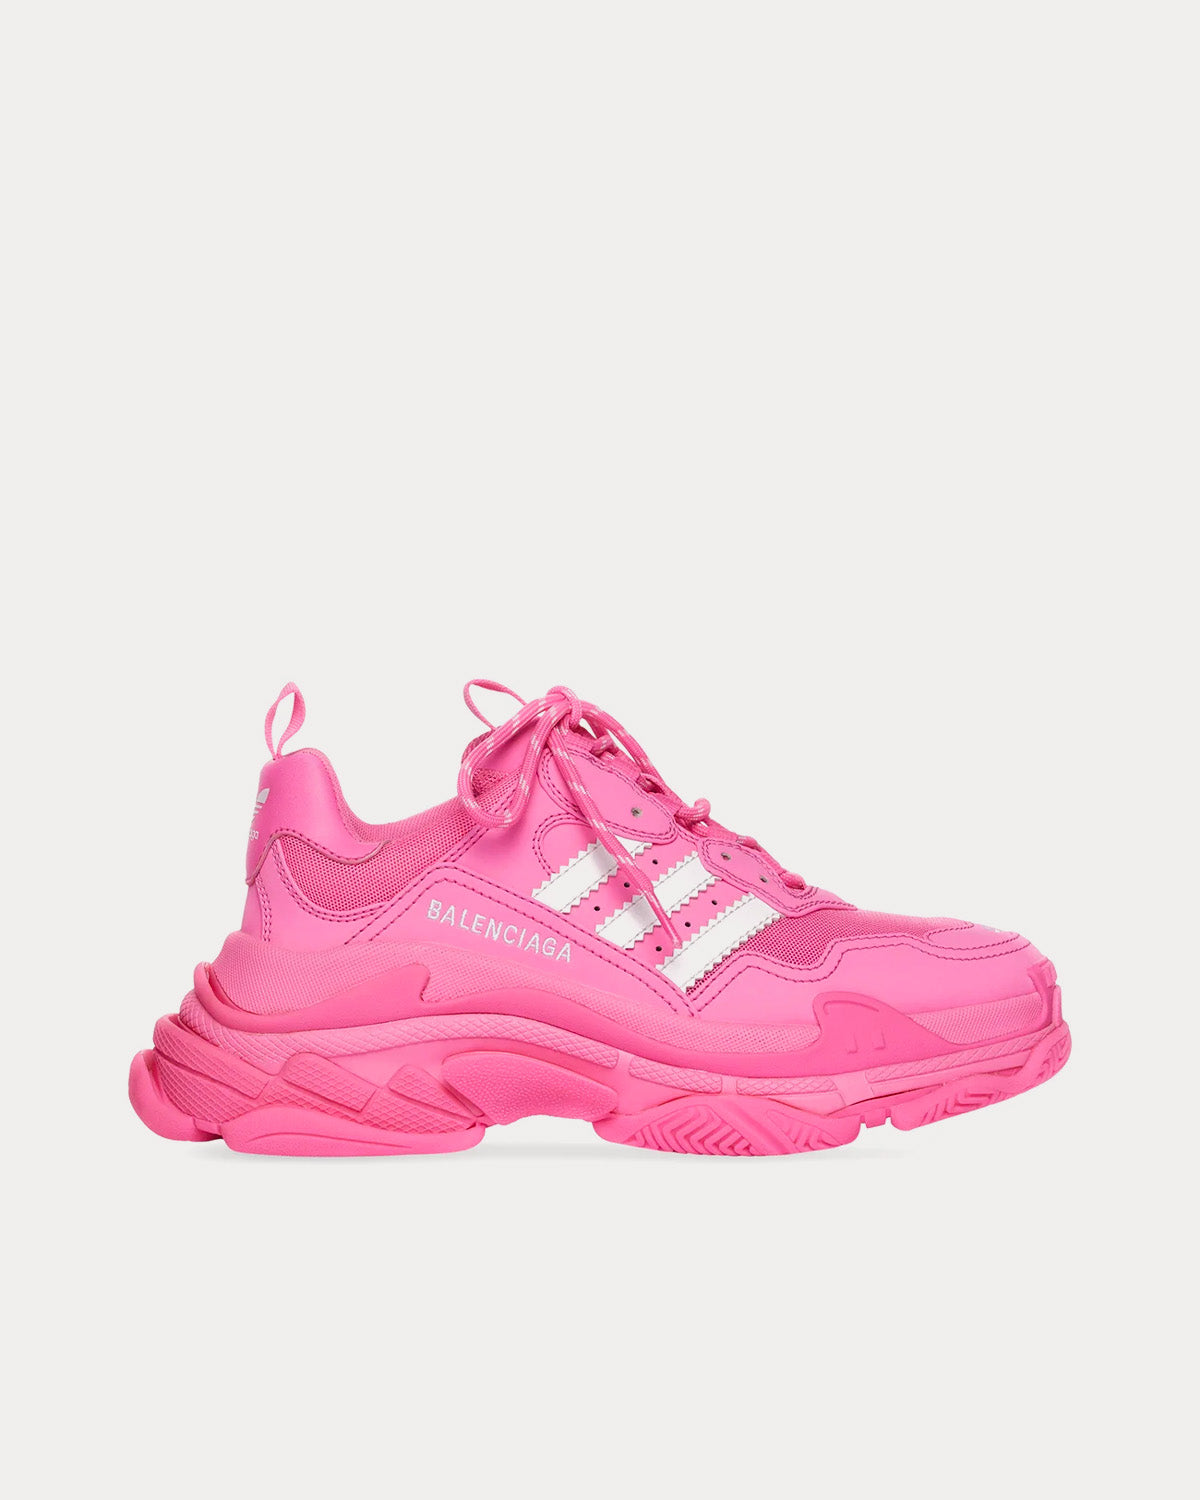 Balenciaga x Adidas S Pink / White Low Top Sneakers - Sneak in Peace